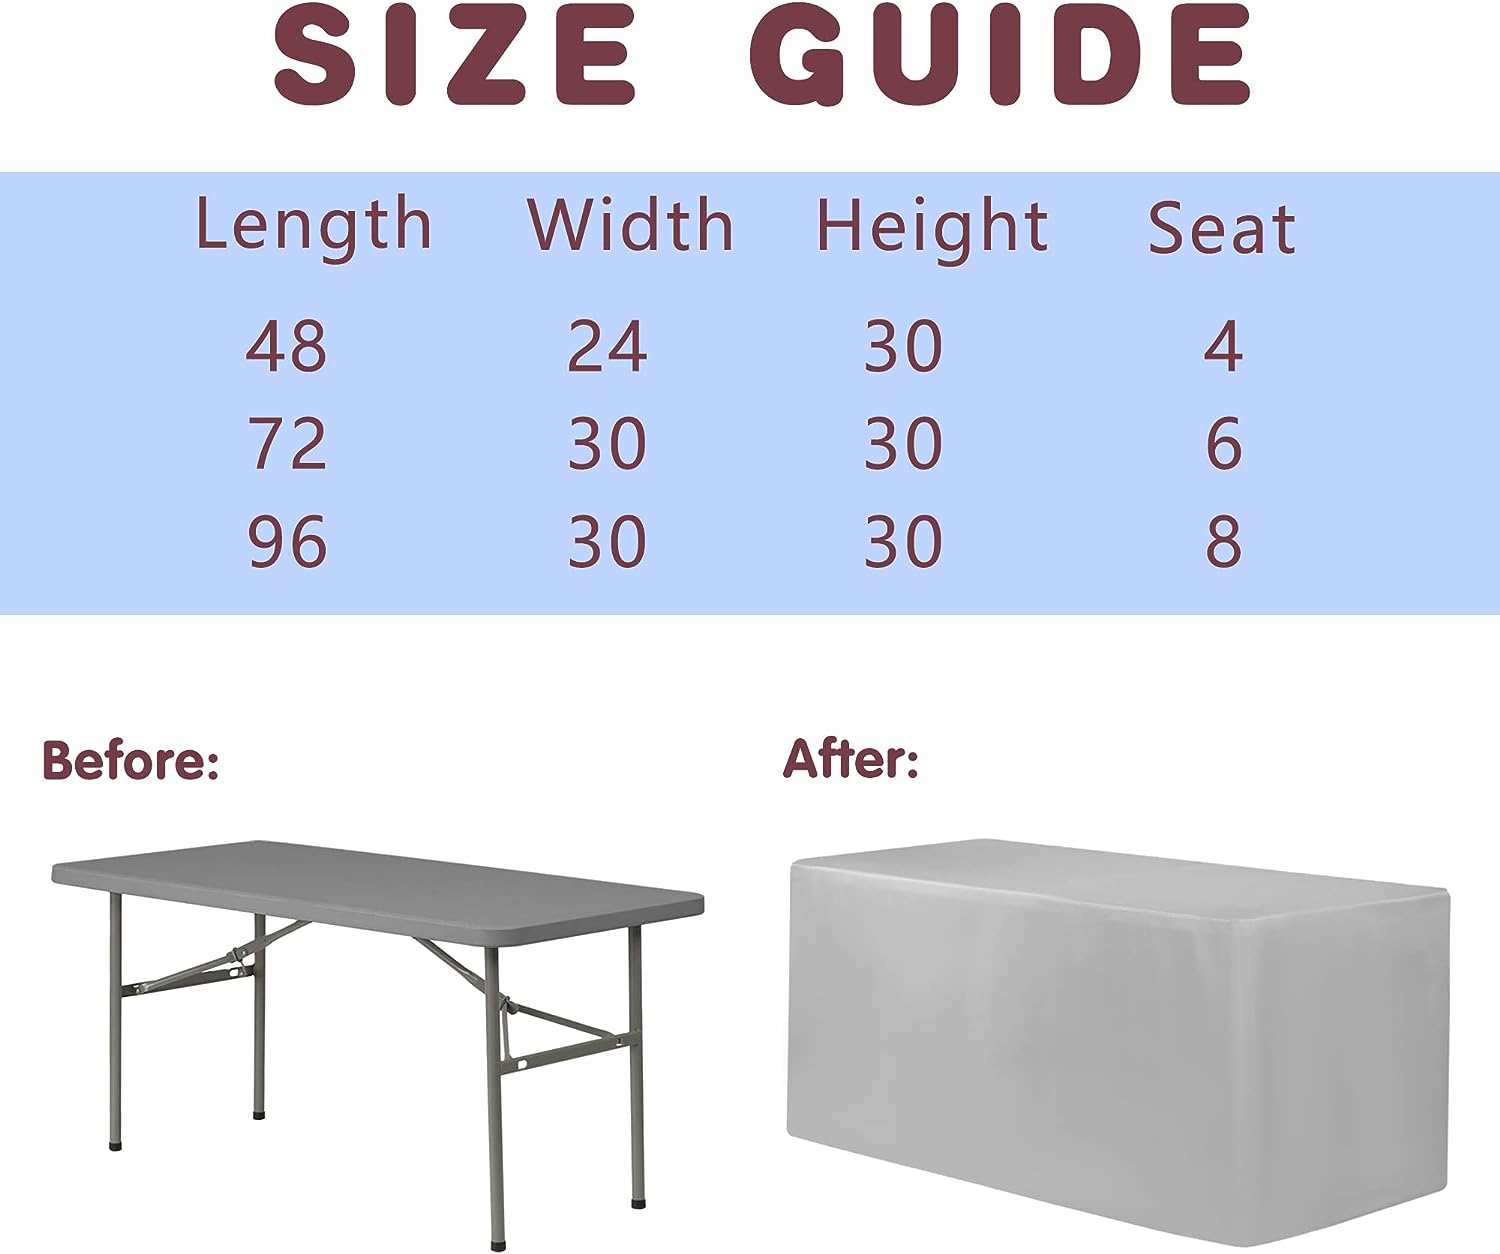 Fundas de mesa ajustables para mesas de 6 pies, 72 x 30 pulgadas, paquete de 2